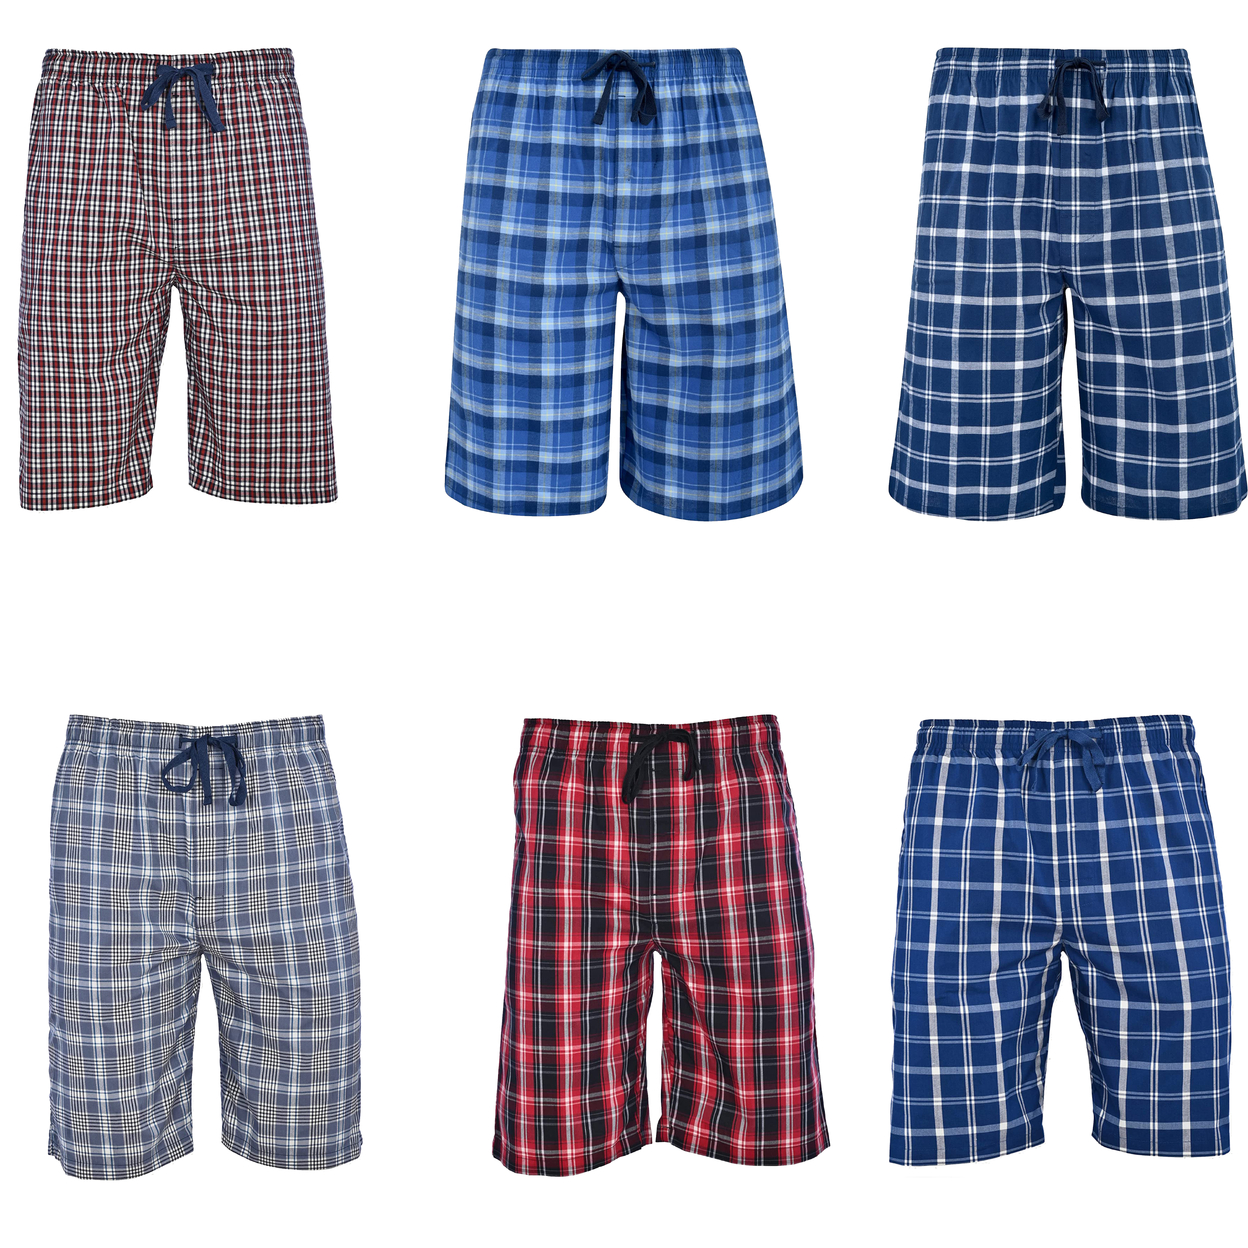 Men's Ultra-Soft Plaid Lounge Pajama Sleep Wear Shorts - Tan, Large